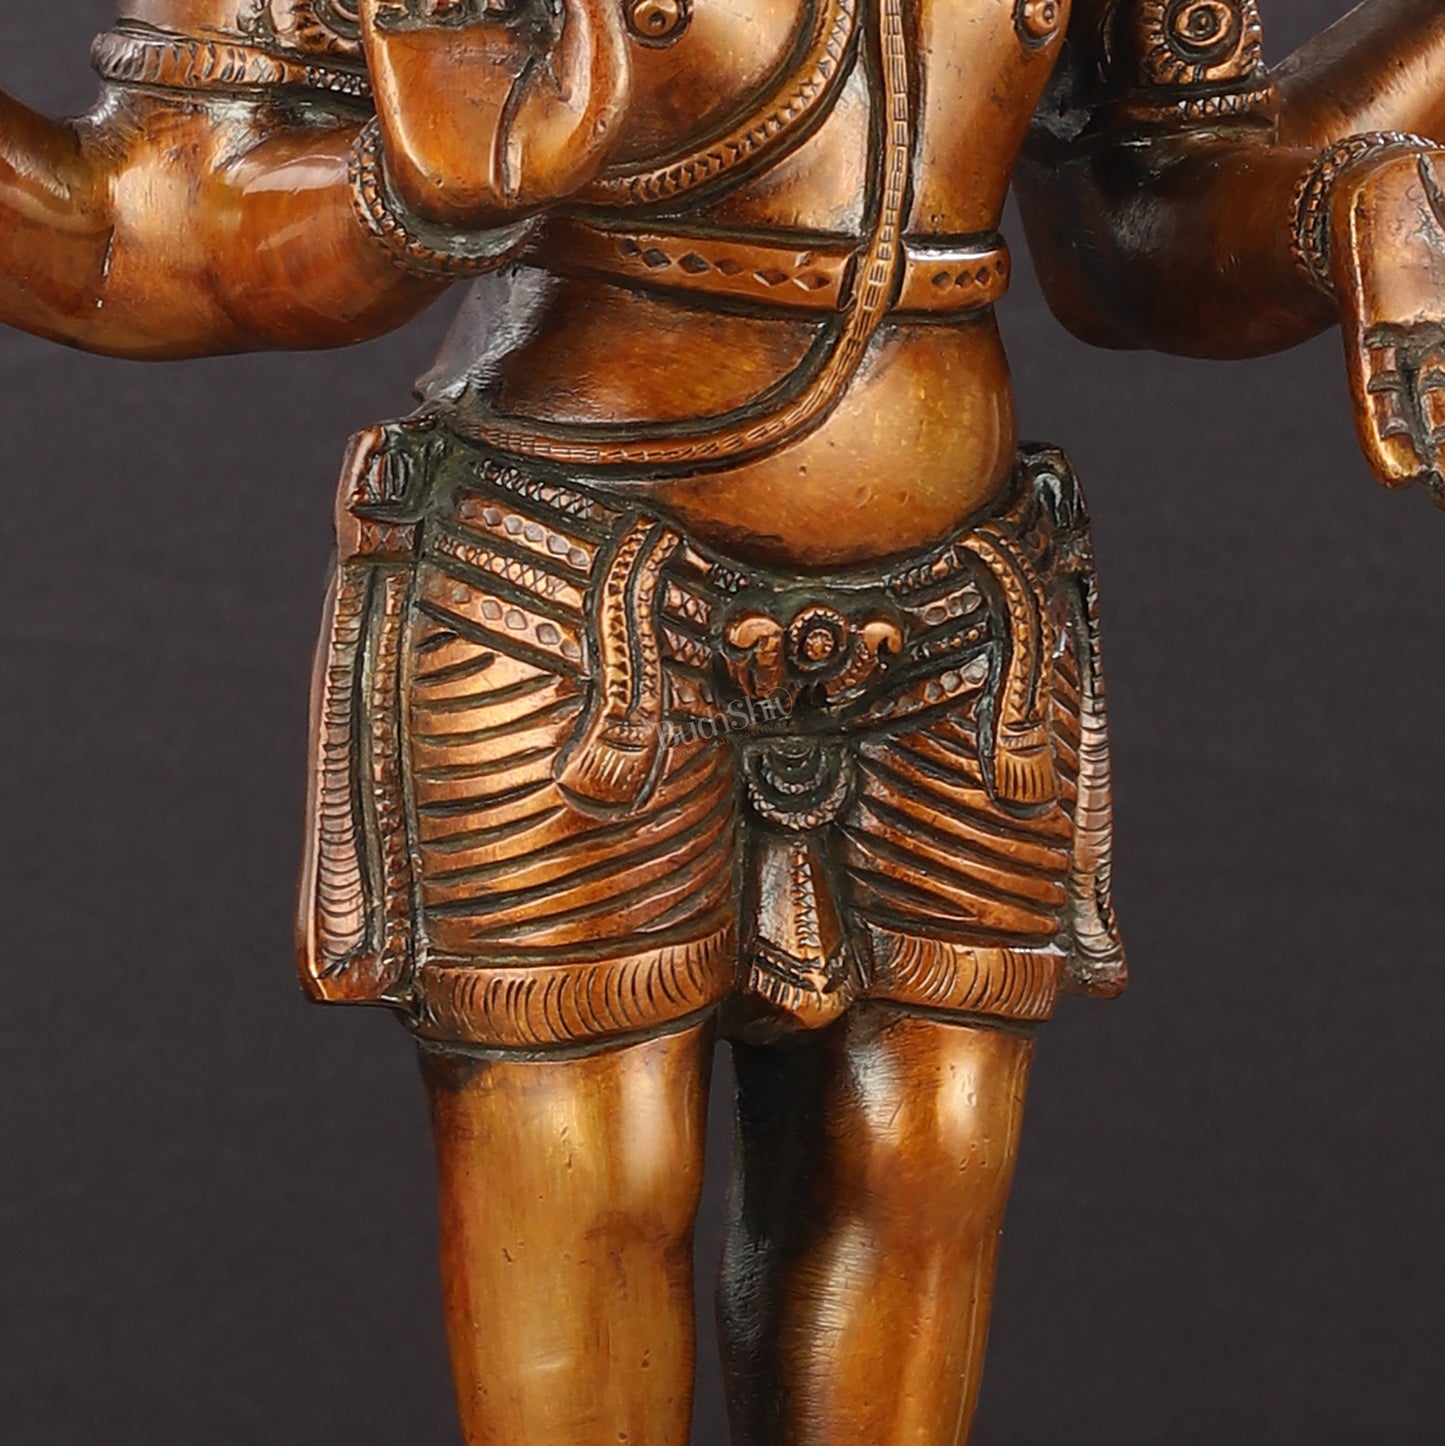 Brass Standing Shiva Pashupatinath Statue 18 inch